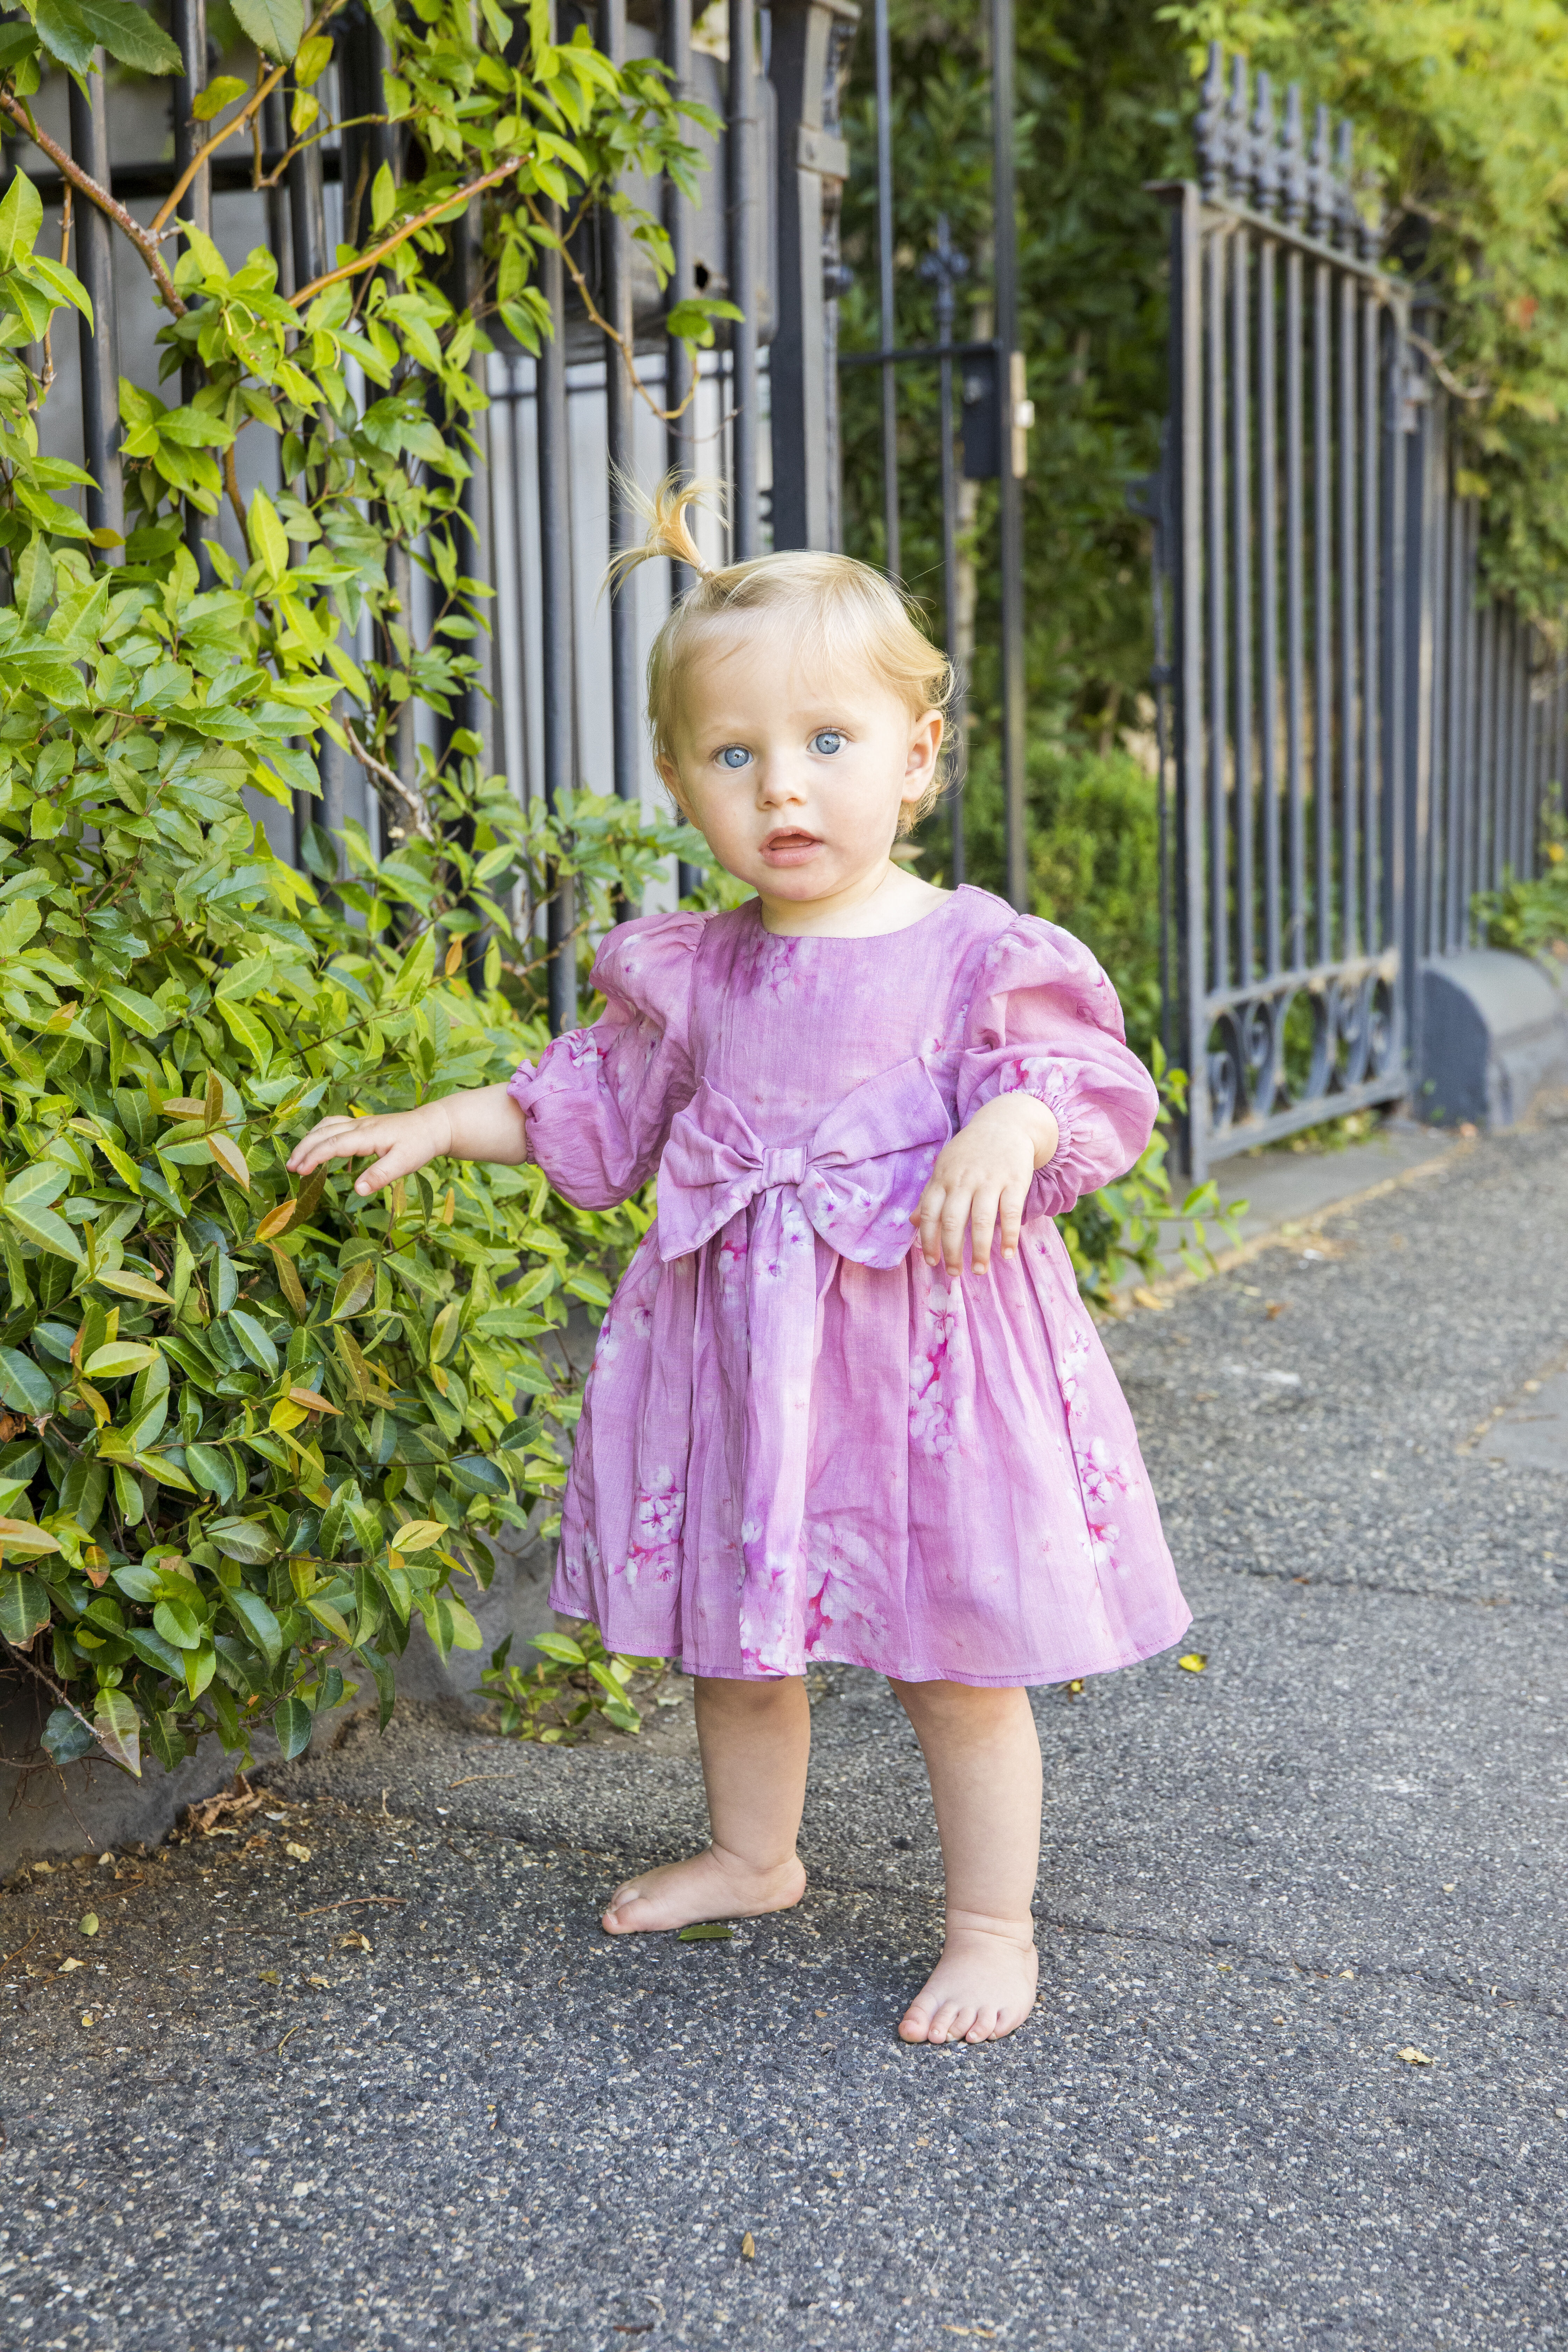 US Newborn Baby Girl Summer Outfits Clothes Princess Dress+PP Pants Shorts Set 